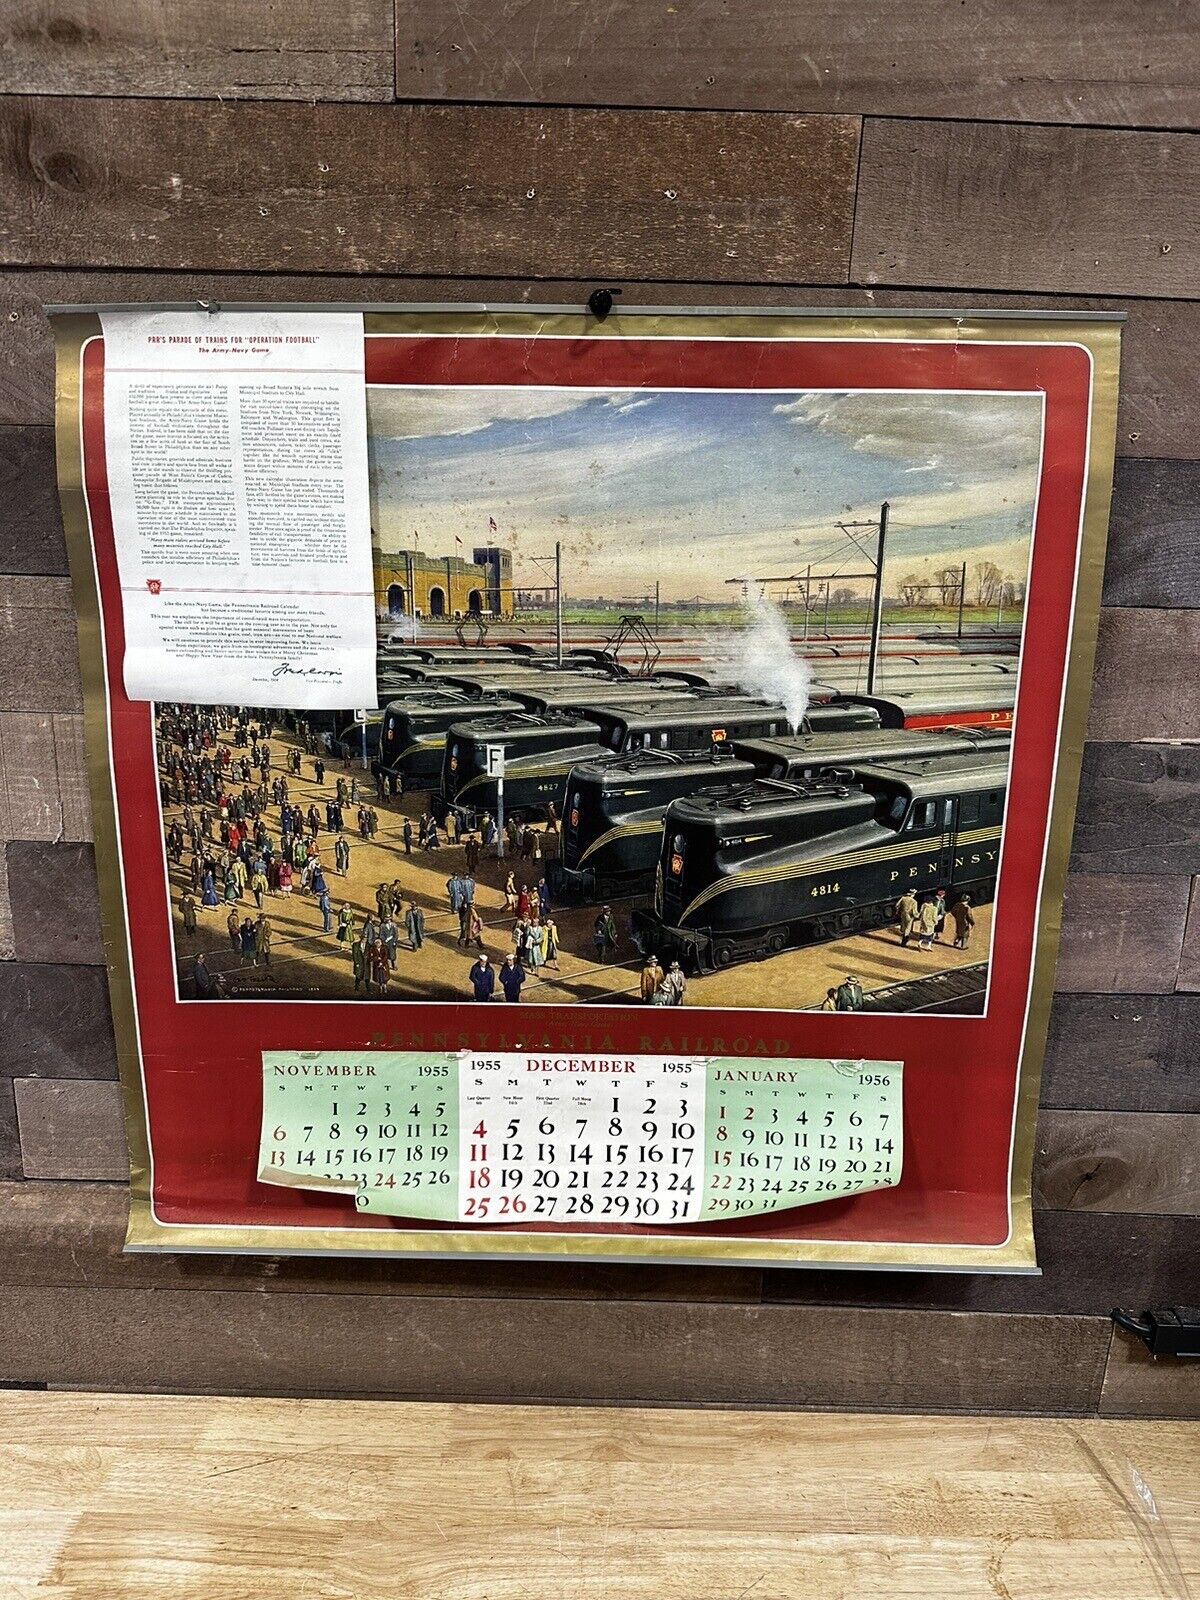 Vintage 1956 Pennsylvania Railroads Calendar “Mass Transportation” Army Navy